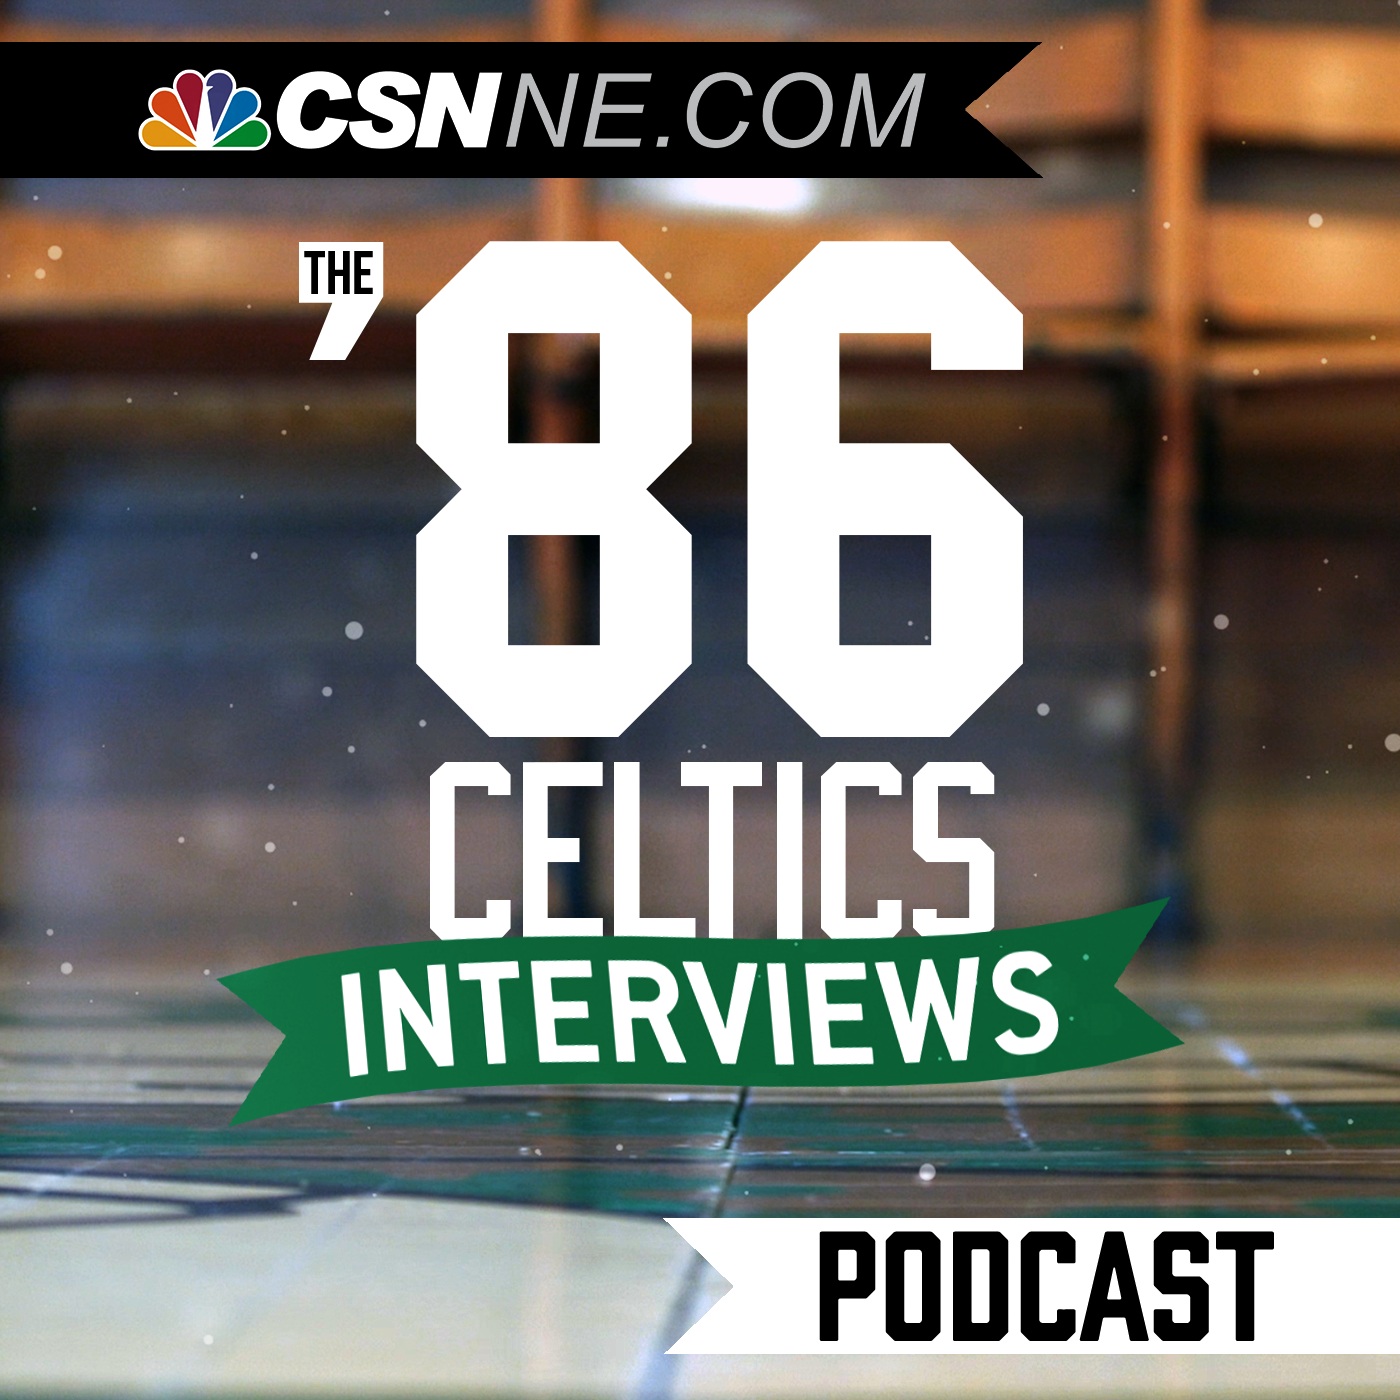 The '86 Celtics Interviews: Special Preview